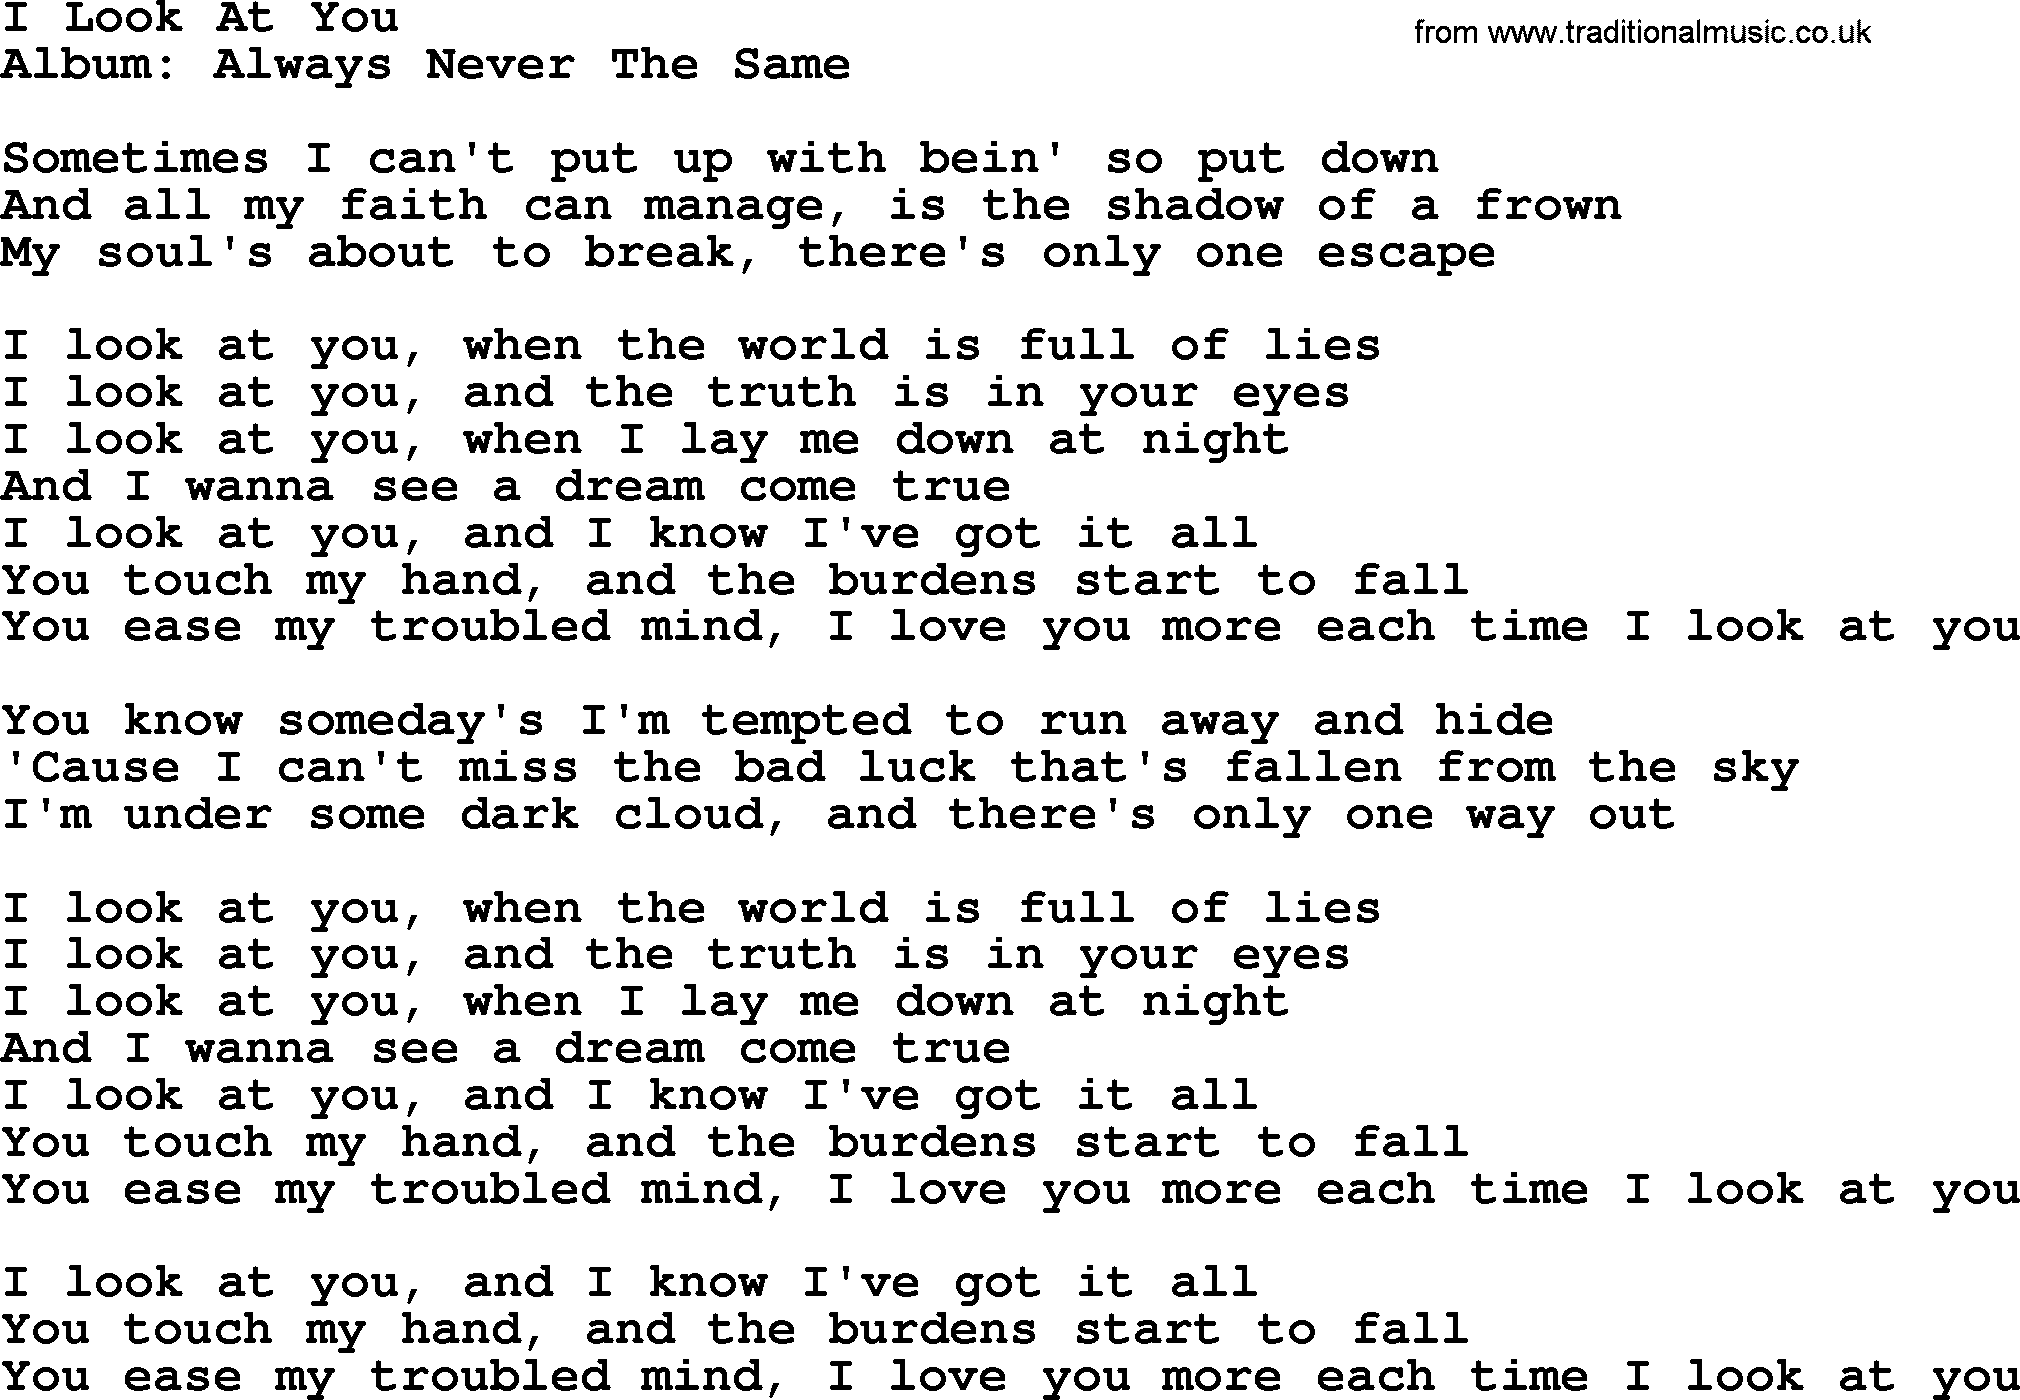 George Strait song: I Look At You, lyrics